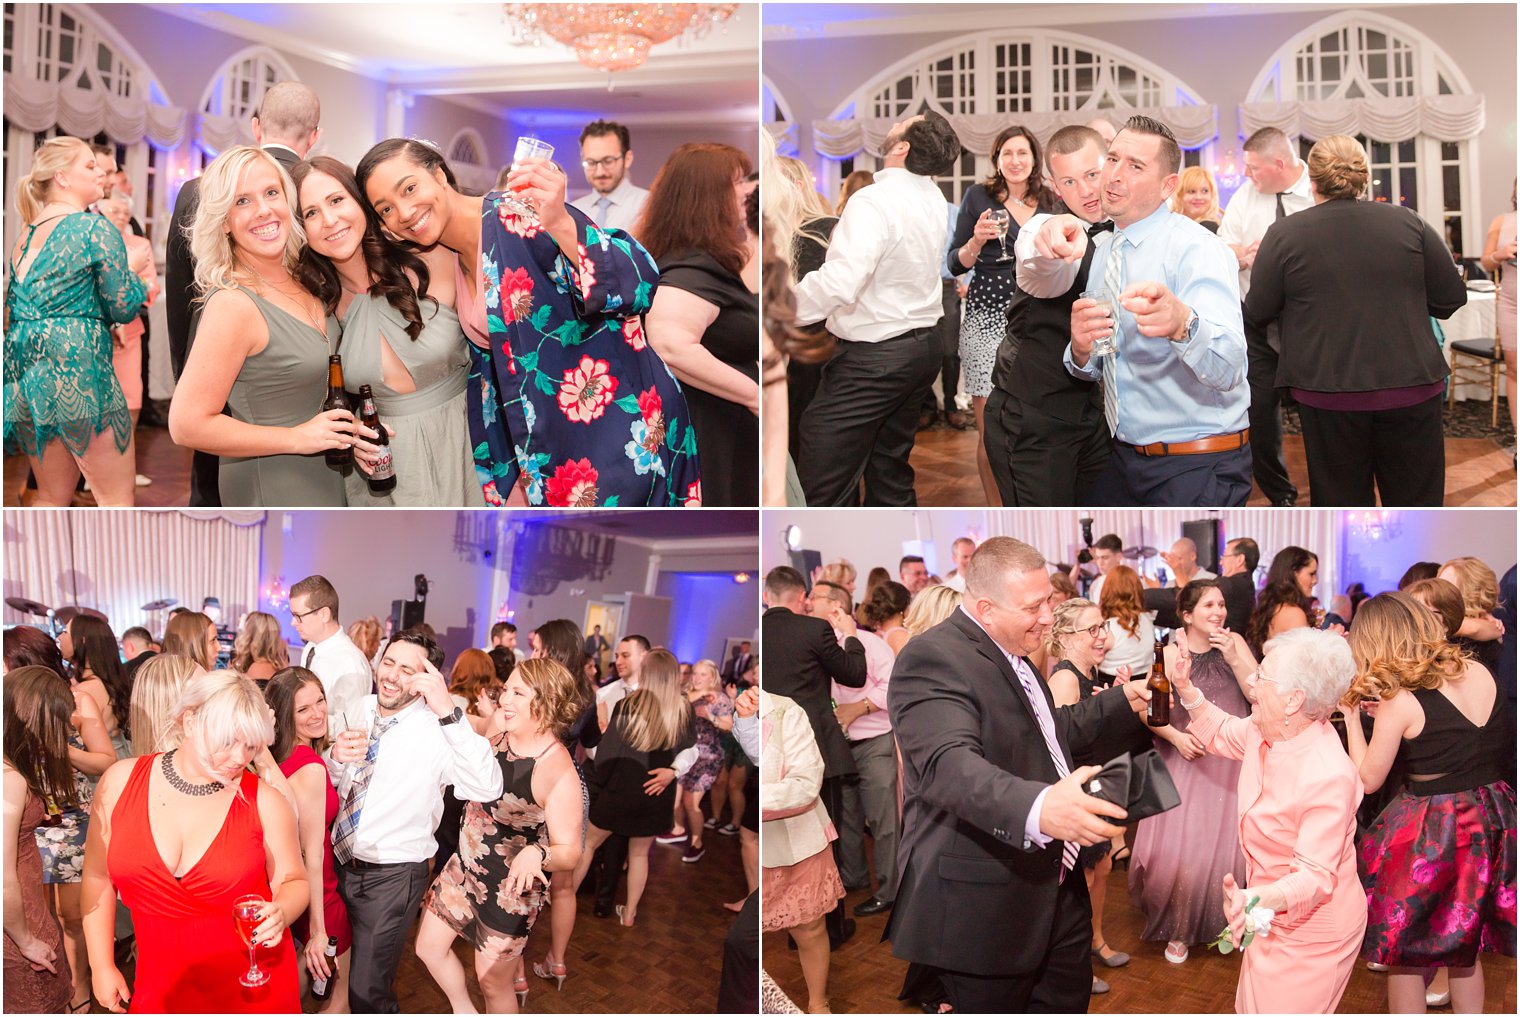 dancing photos at reception at Pen Ryn Estate